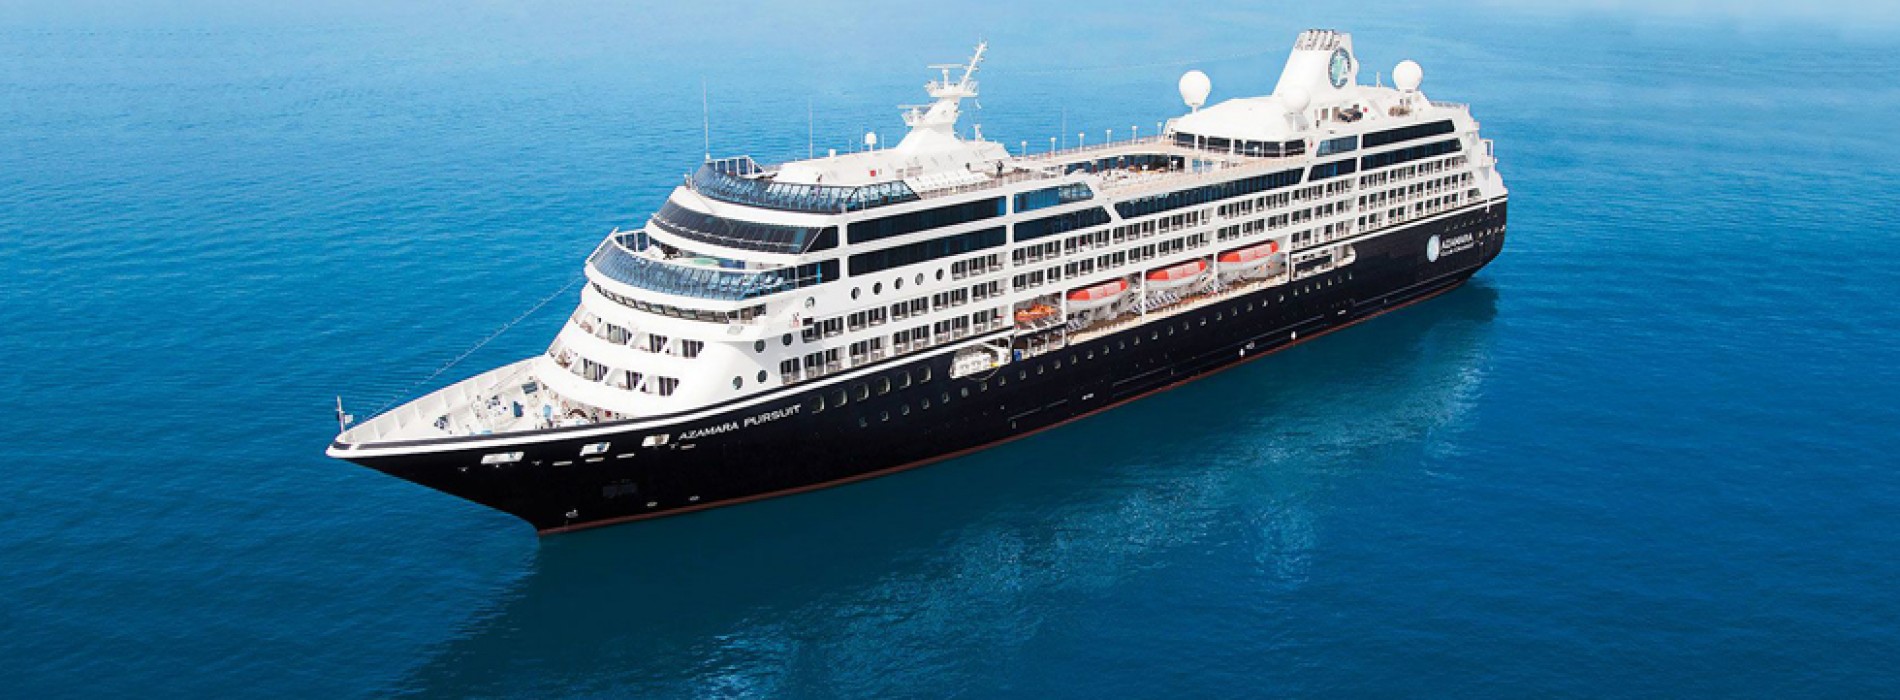 Azamara Club Cruises announces expansion of fleet with its latest acquisition the Azamara Pursuit